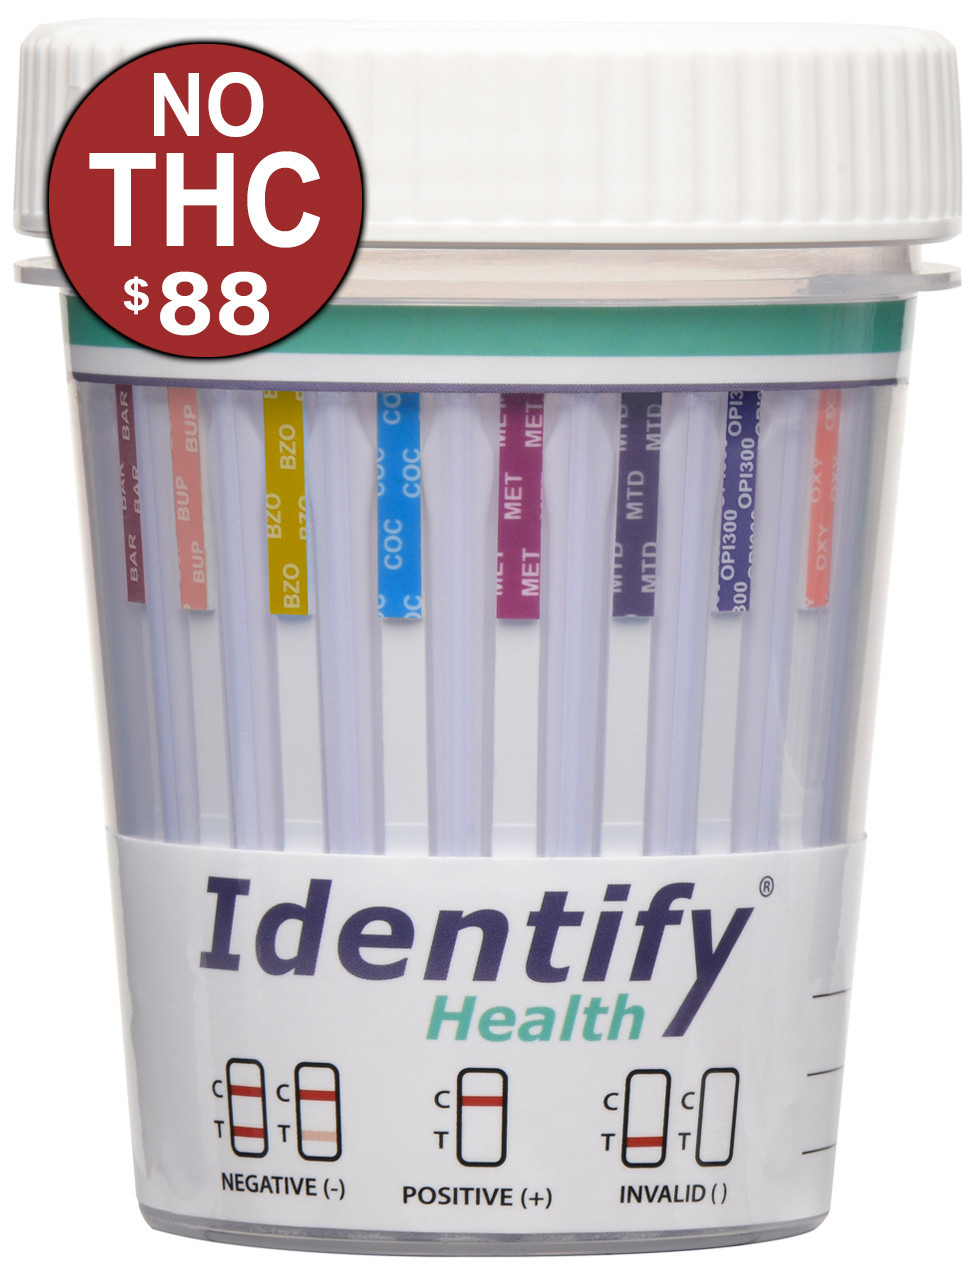 https://cdn11.bigcommerce.com/s-svmxqq8b/images/stencil/1280x1280/products/36/1866/identify-health-9-panel-drug-test-cup-NO-THC-ID-H9-1-1280x979-NOV-2022-ID__14246.1668441395.jpg?c=2